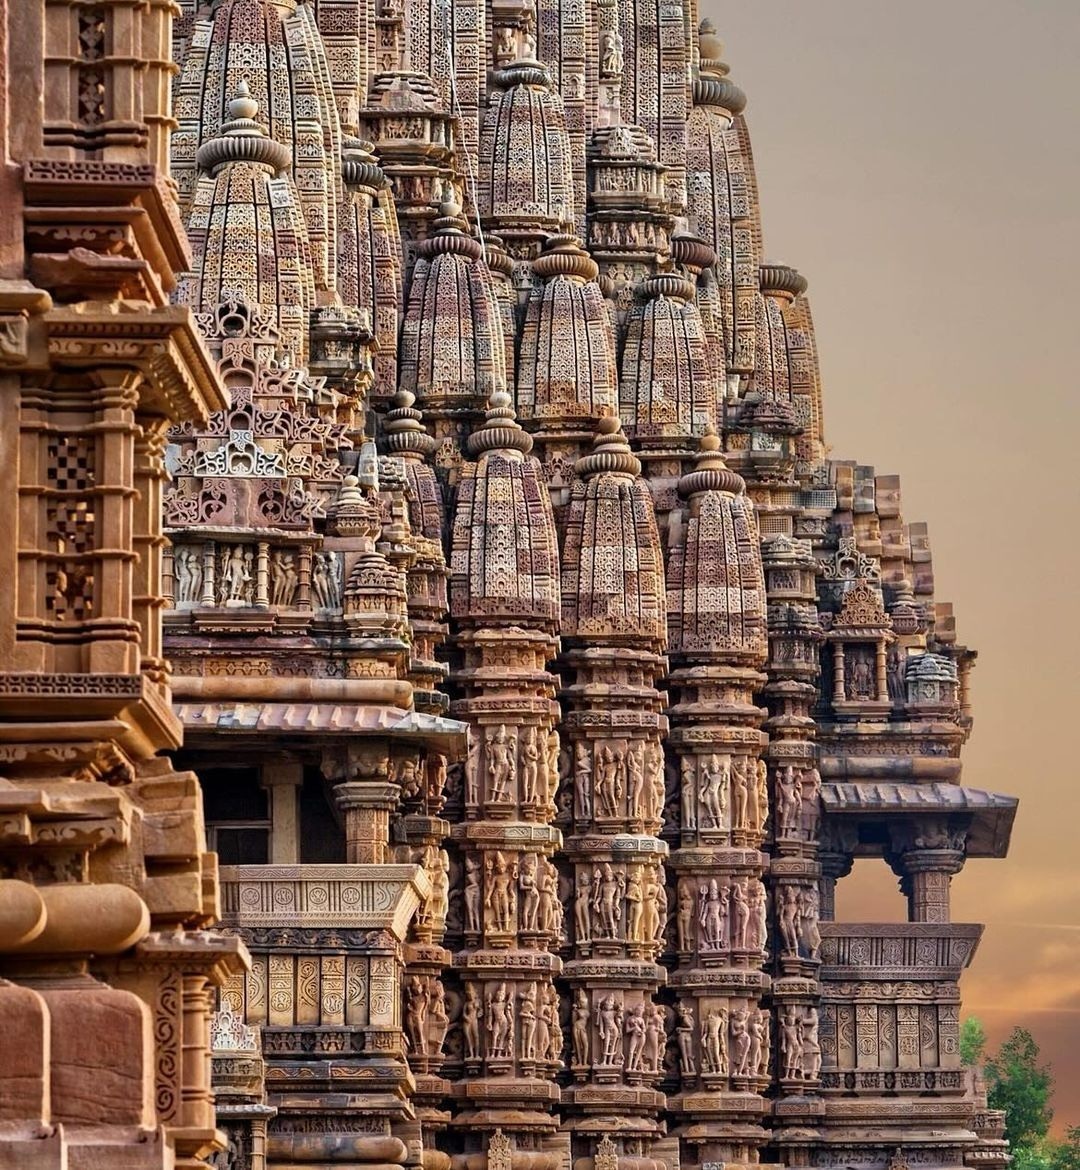 #Repost @natgeotravellerindia Chronicles of the past, carved to last. 

📍 Khajuraho, Madhya Pradesh 

#Repost from @mysoretusker 📸

#NatGeoTravellerIndia  #India #Travel #heritage #Khajuraho #Temple #MadhyaPradesh #Carvings #architecture #incredibleindia #mptourism